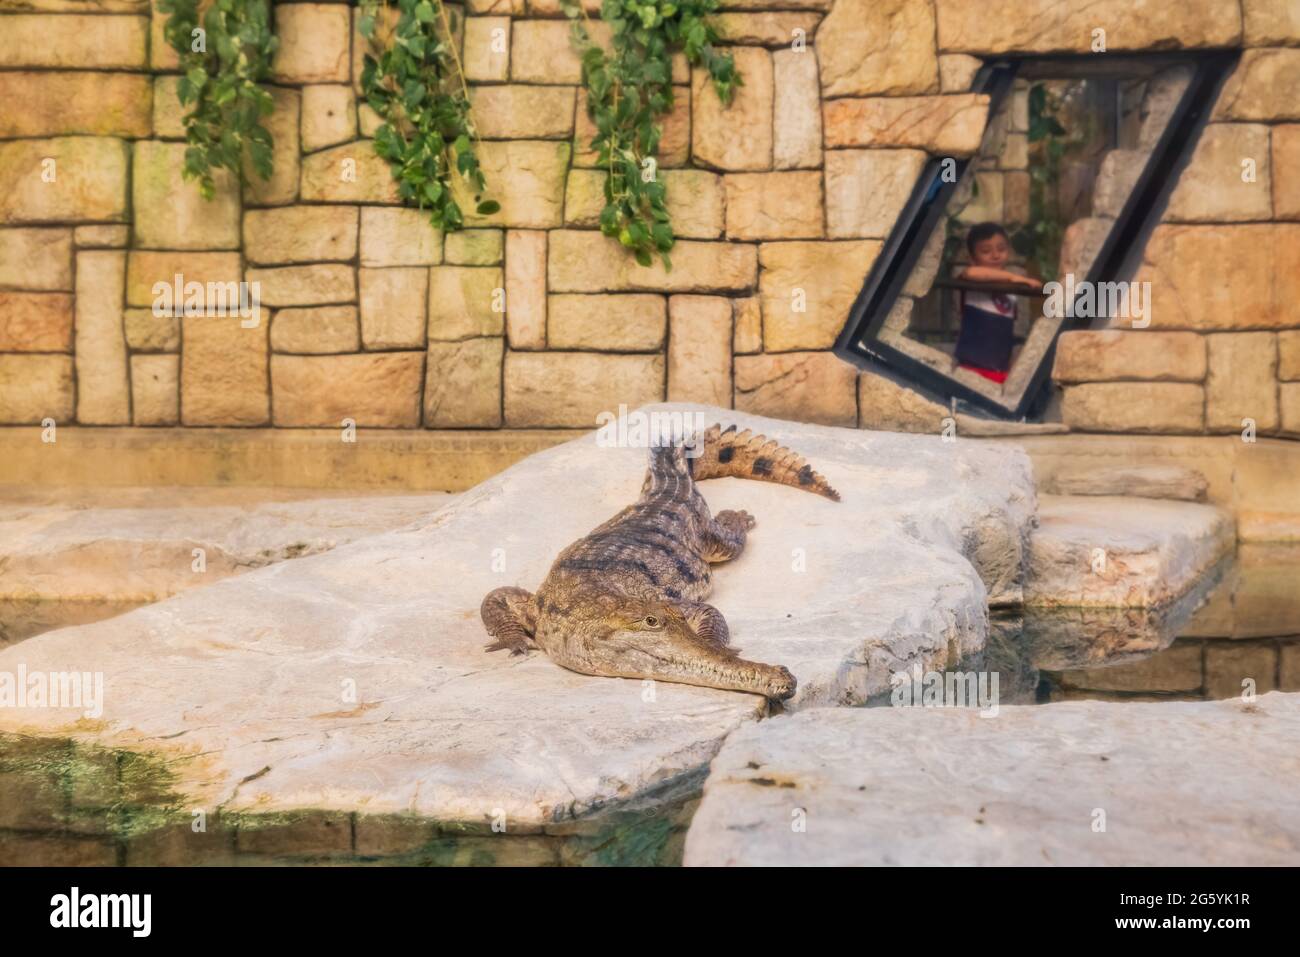 Crocodile aquarium people hi-res stock photography and images - Alamy